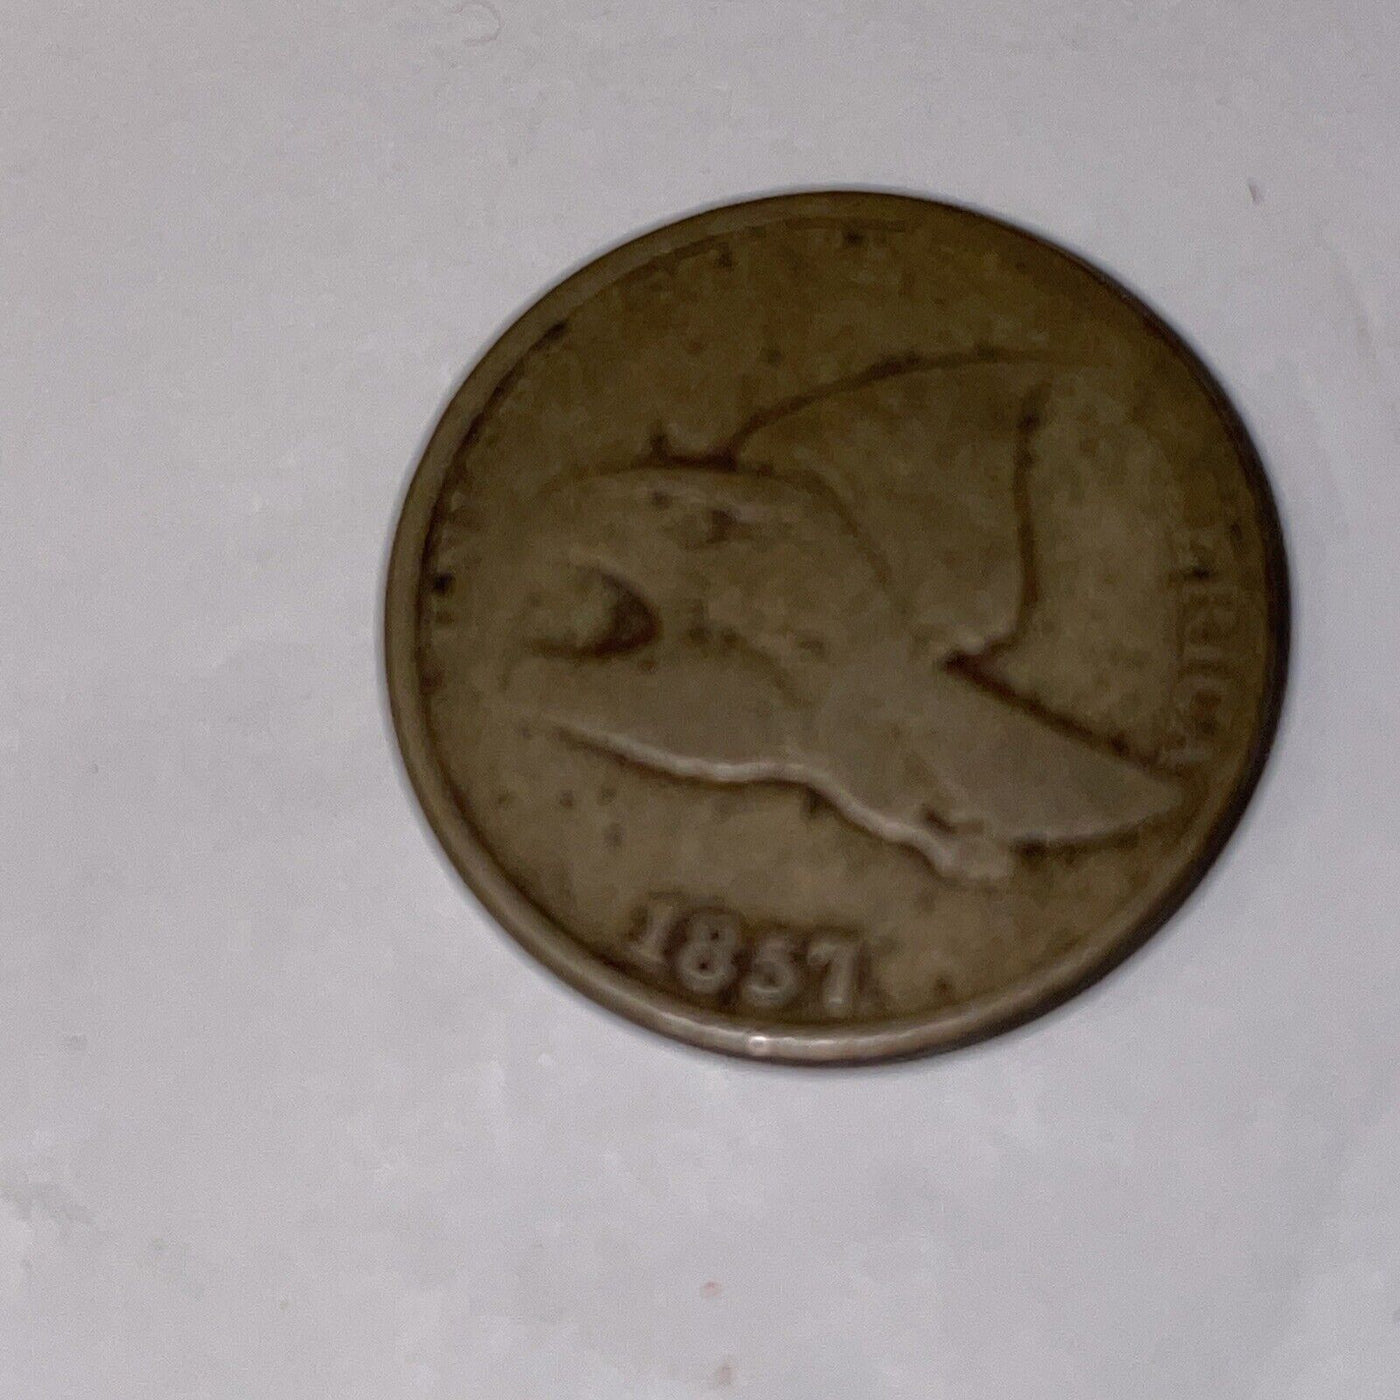 KP36 - 1857 flying eagle cent VG+ Gr8  Convo piece